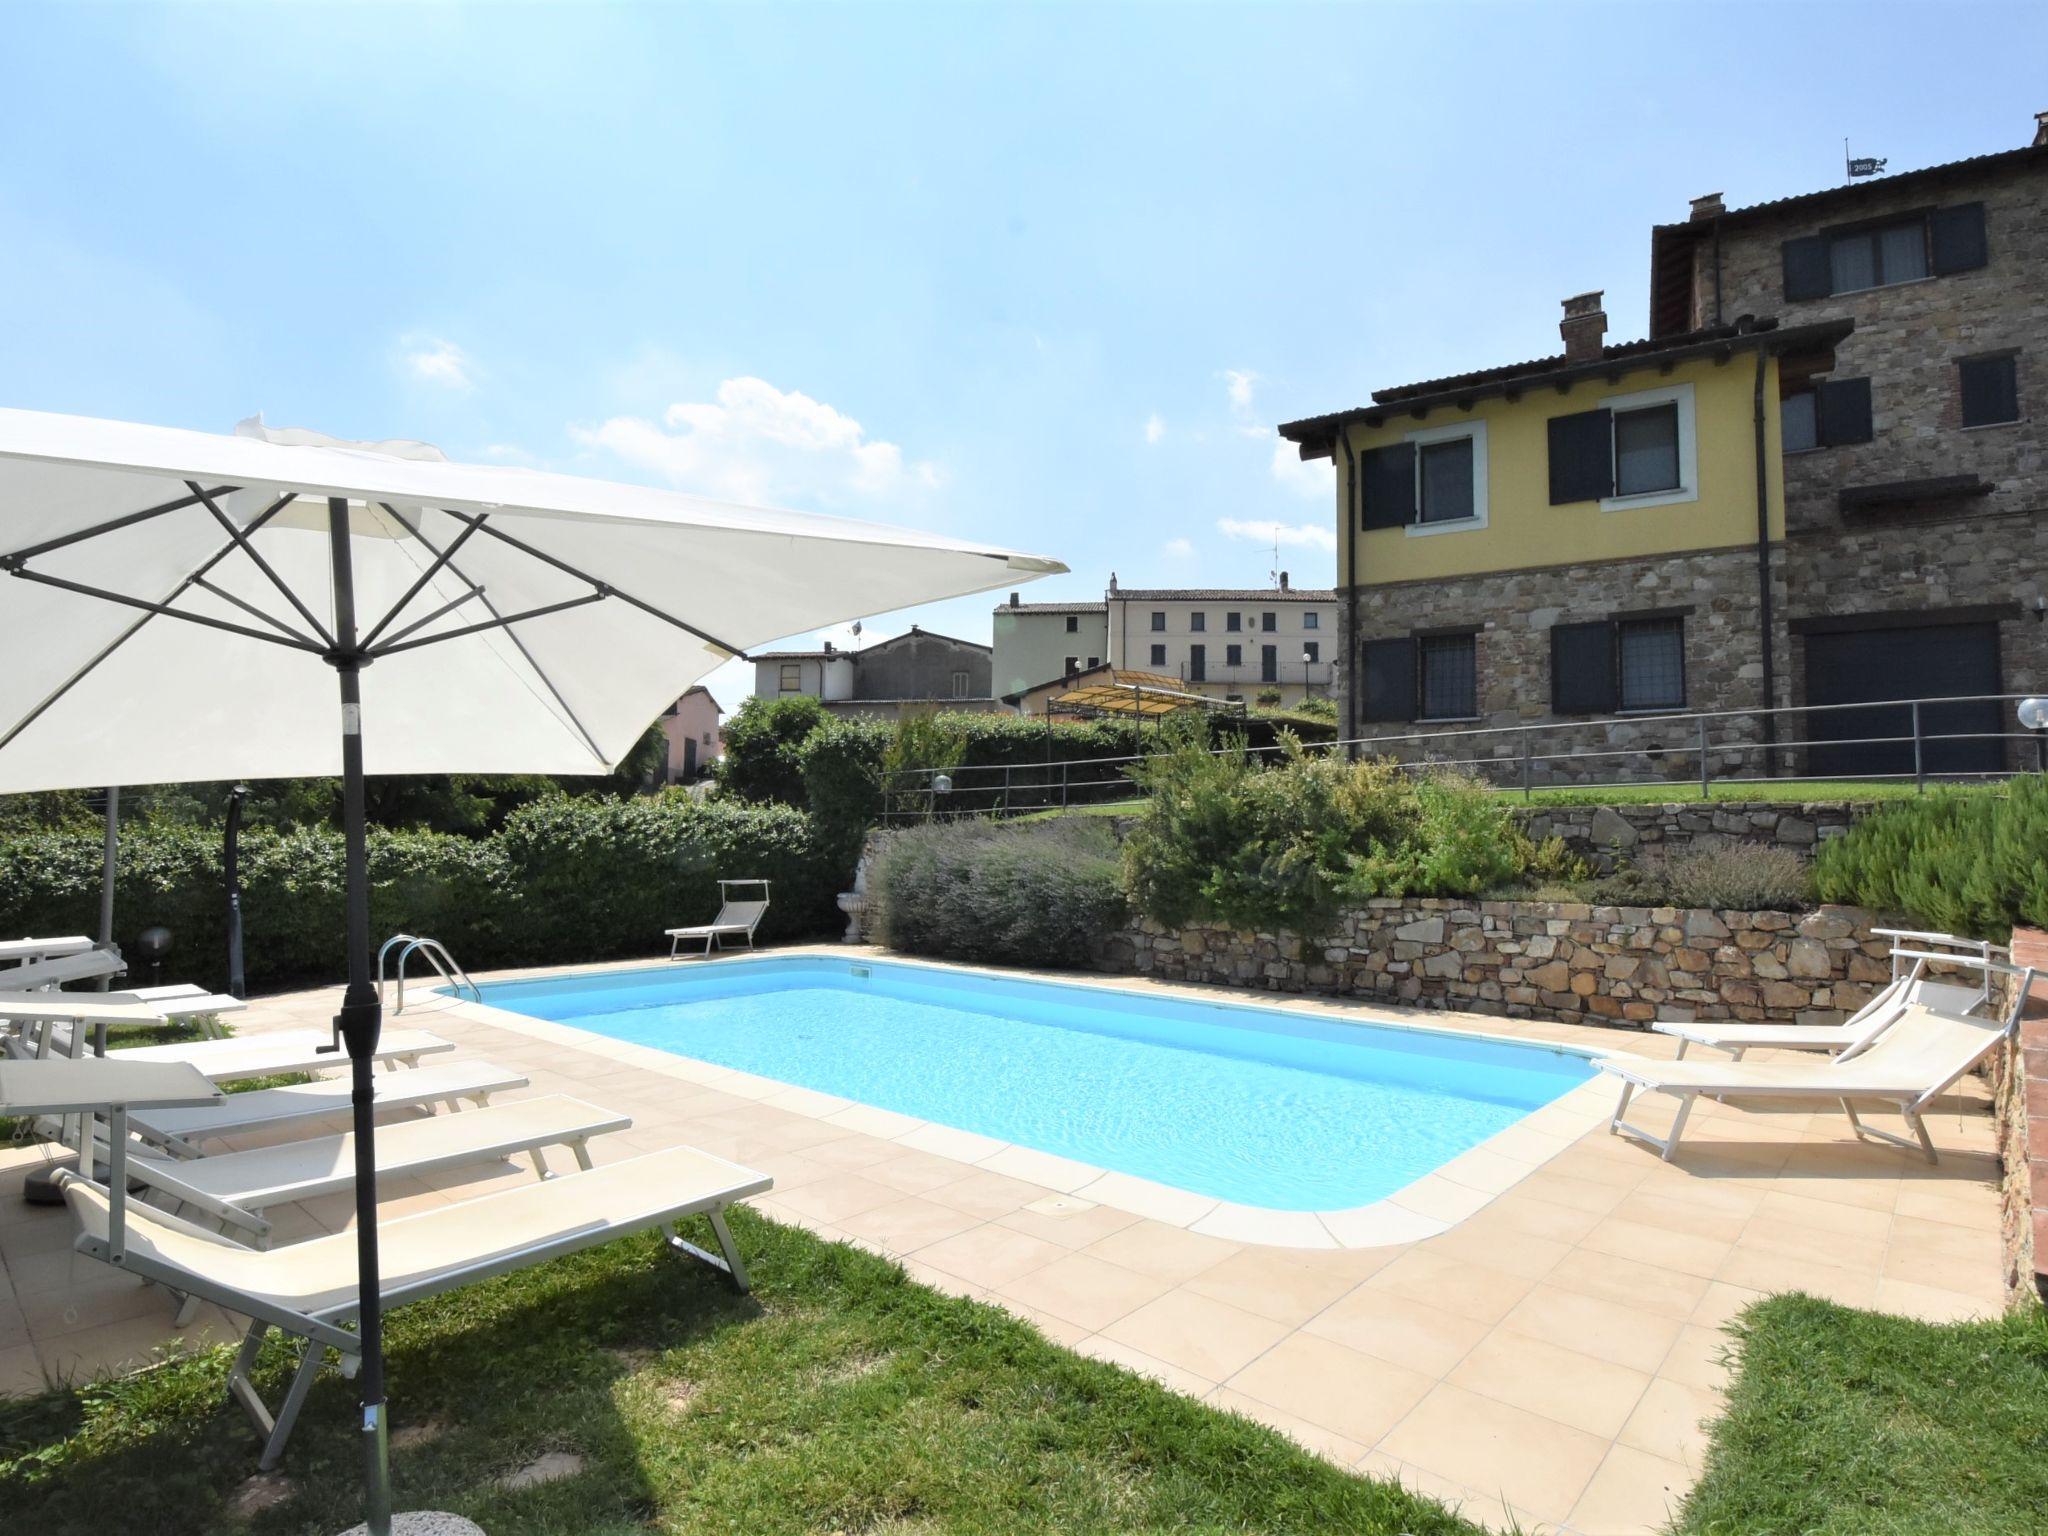 Foto 1 - Appartamento con 1 camera da letto a Castana con piscina e giardino